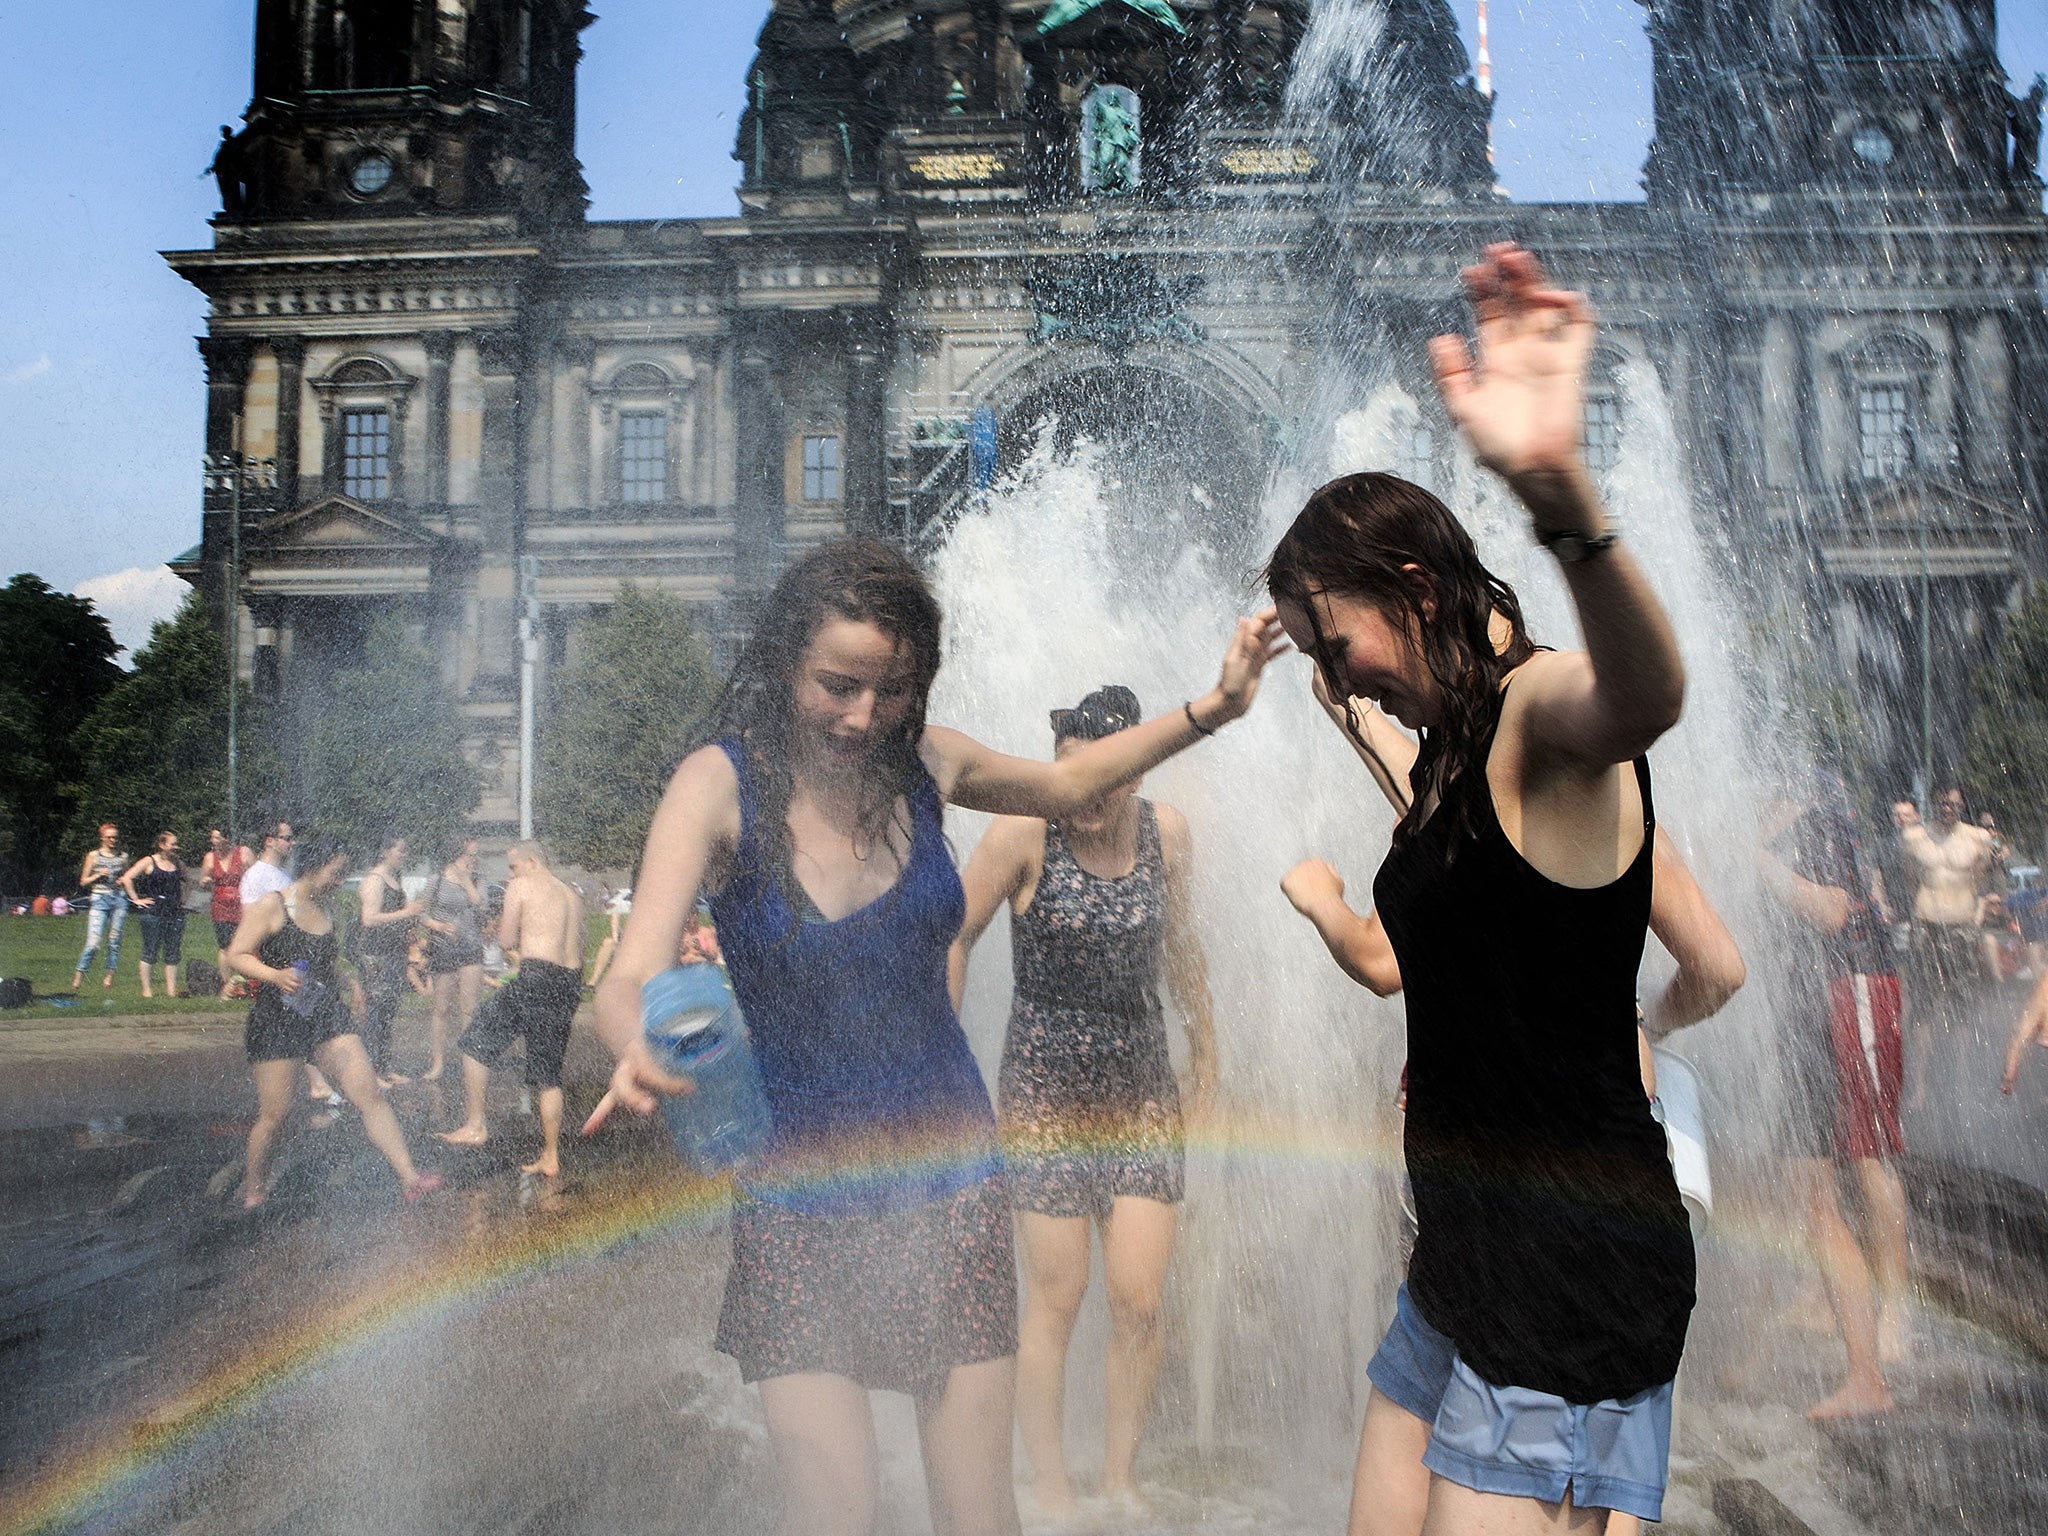 People enjoy the water fountain in the landmark Lustgarten in Berlin earlier this summer